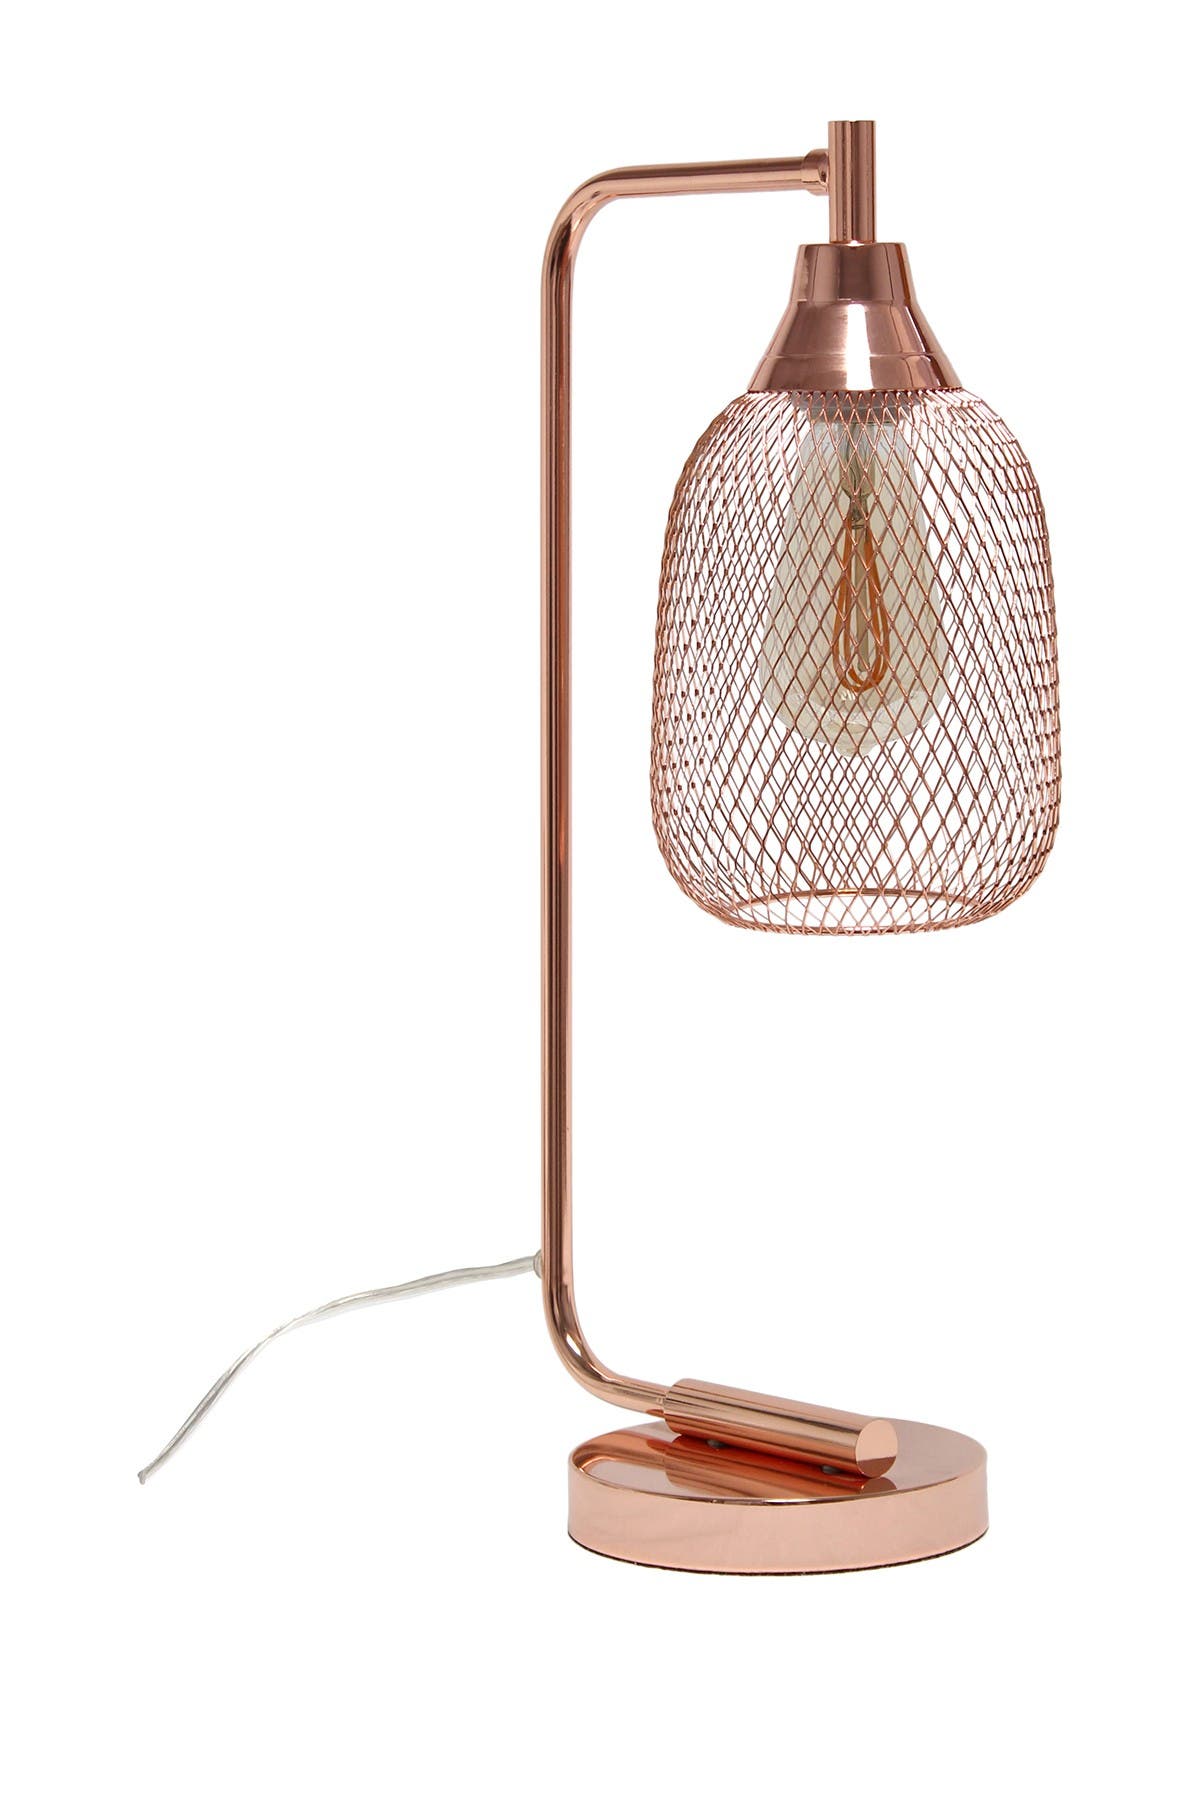 Lalia Home Industrial Mesh Desk Lamp In Rose